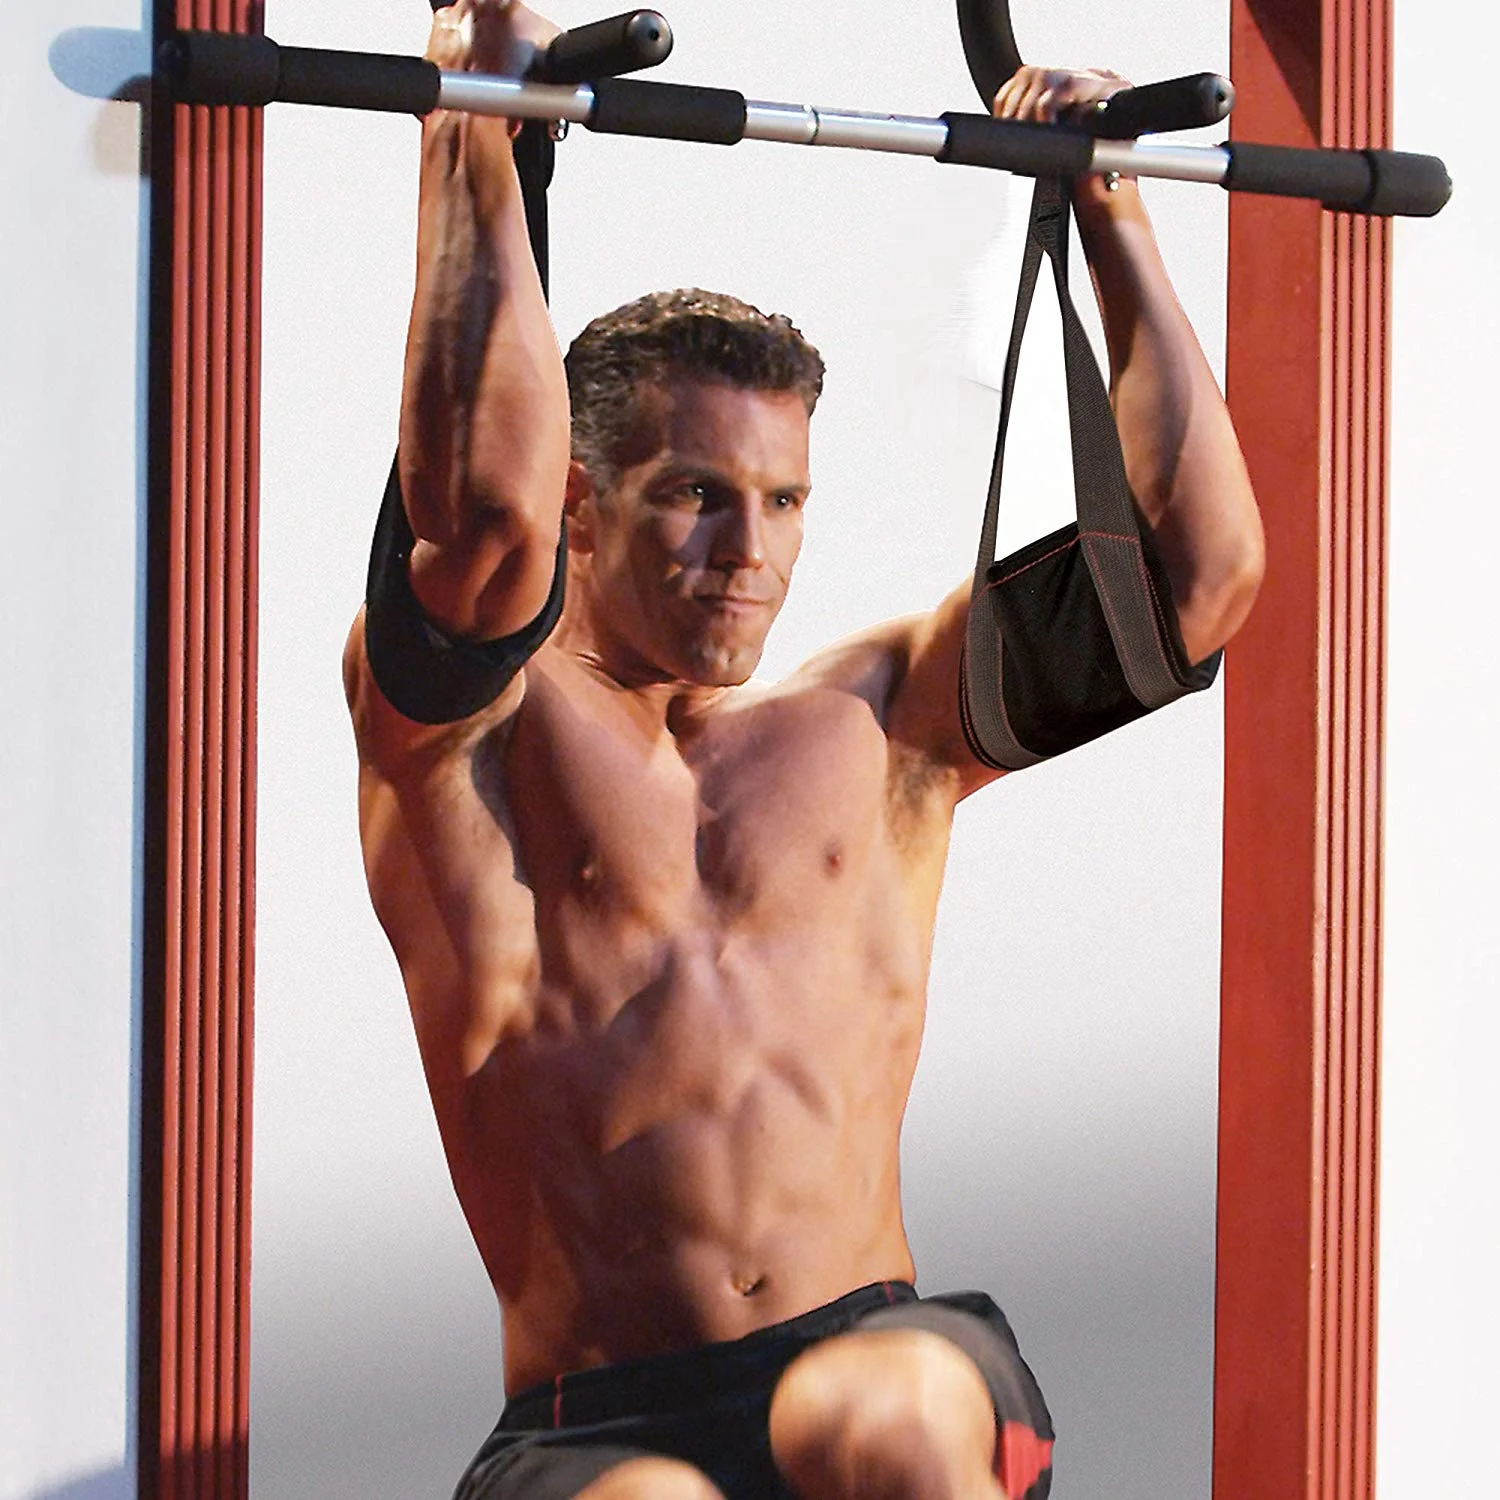 2Pcs Abdominal Muscle Training Straps AB Hanging Sling Belt Pull Up Leg Raiser Sports Fitness Exercise Equipment for Men Women Home Gym Workout 